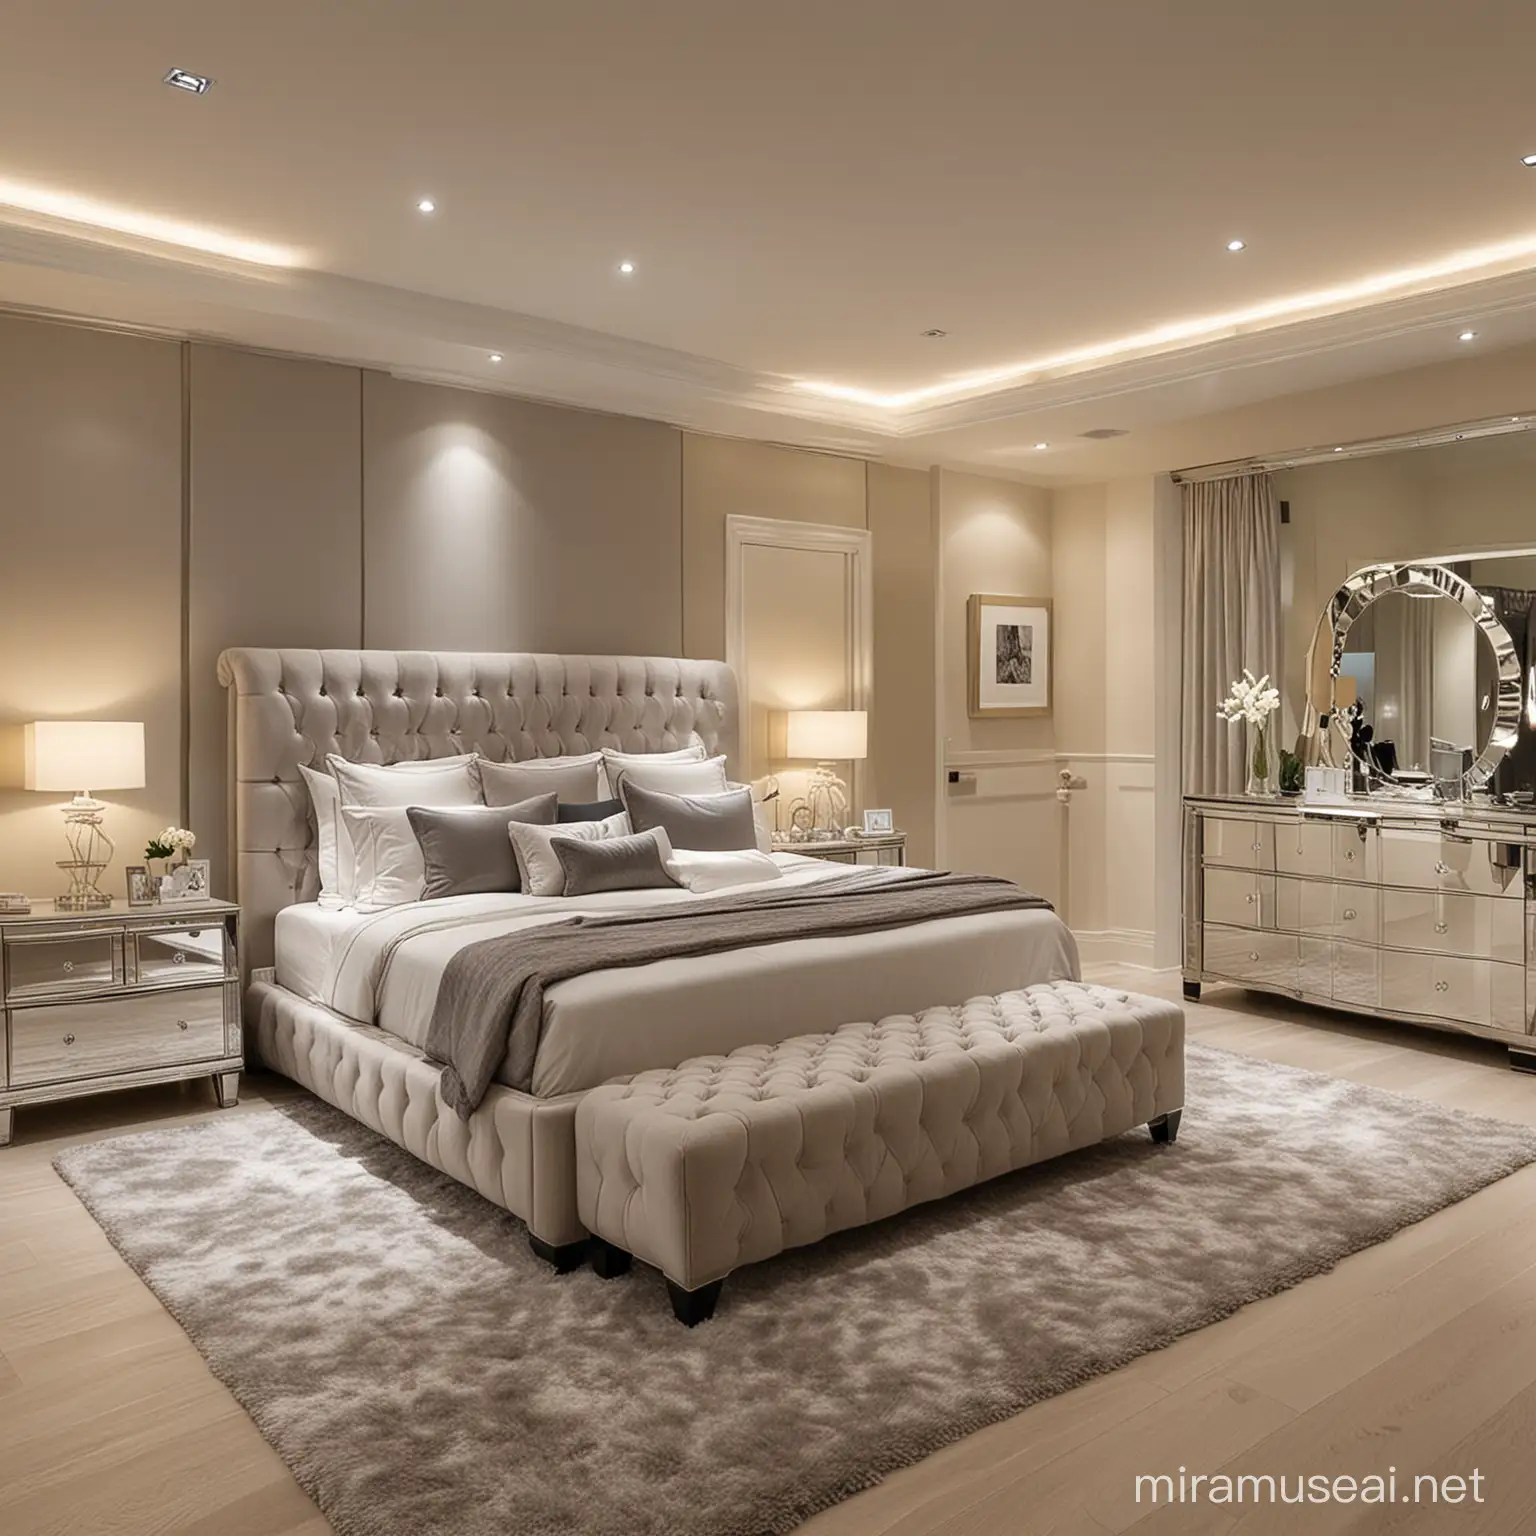 Elegant KingSize Bedroom with Modern Furnishings and Luxurious Lighting